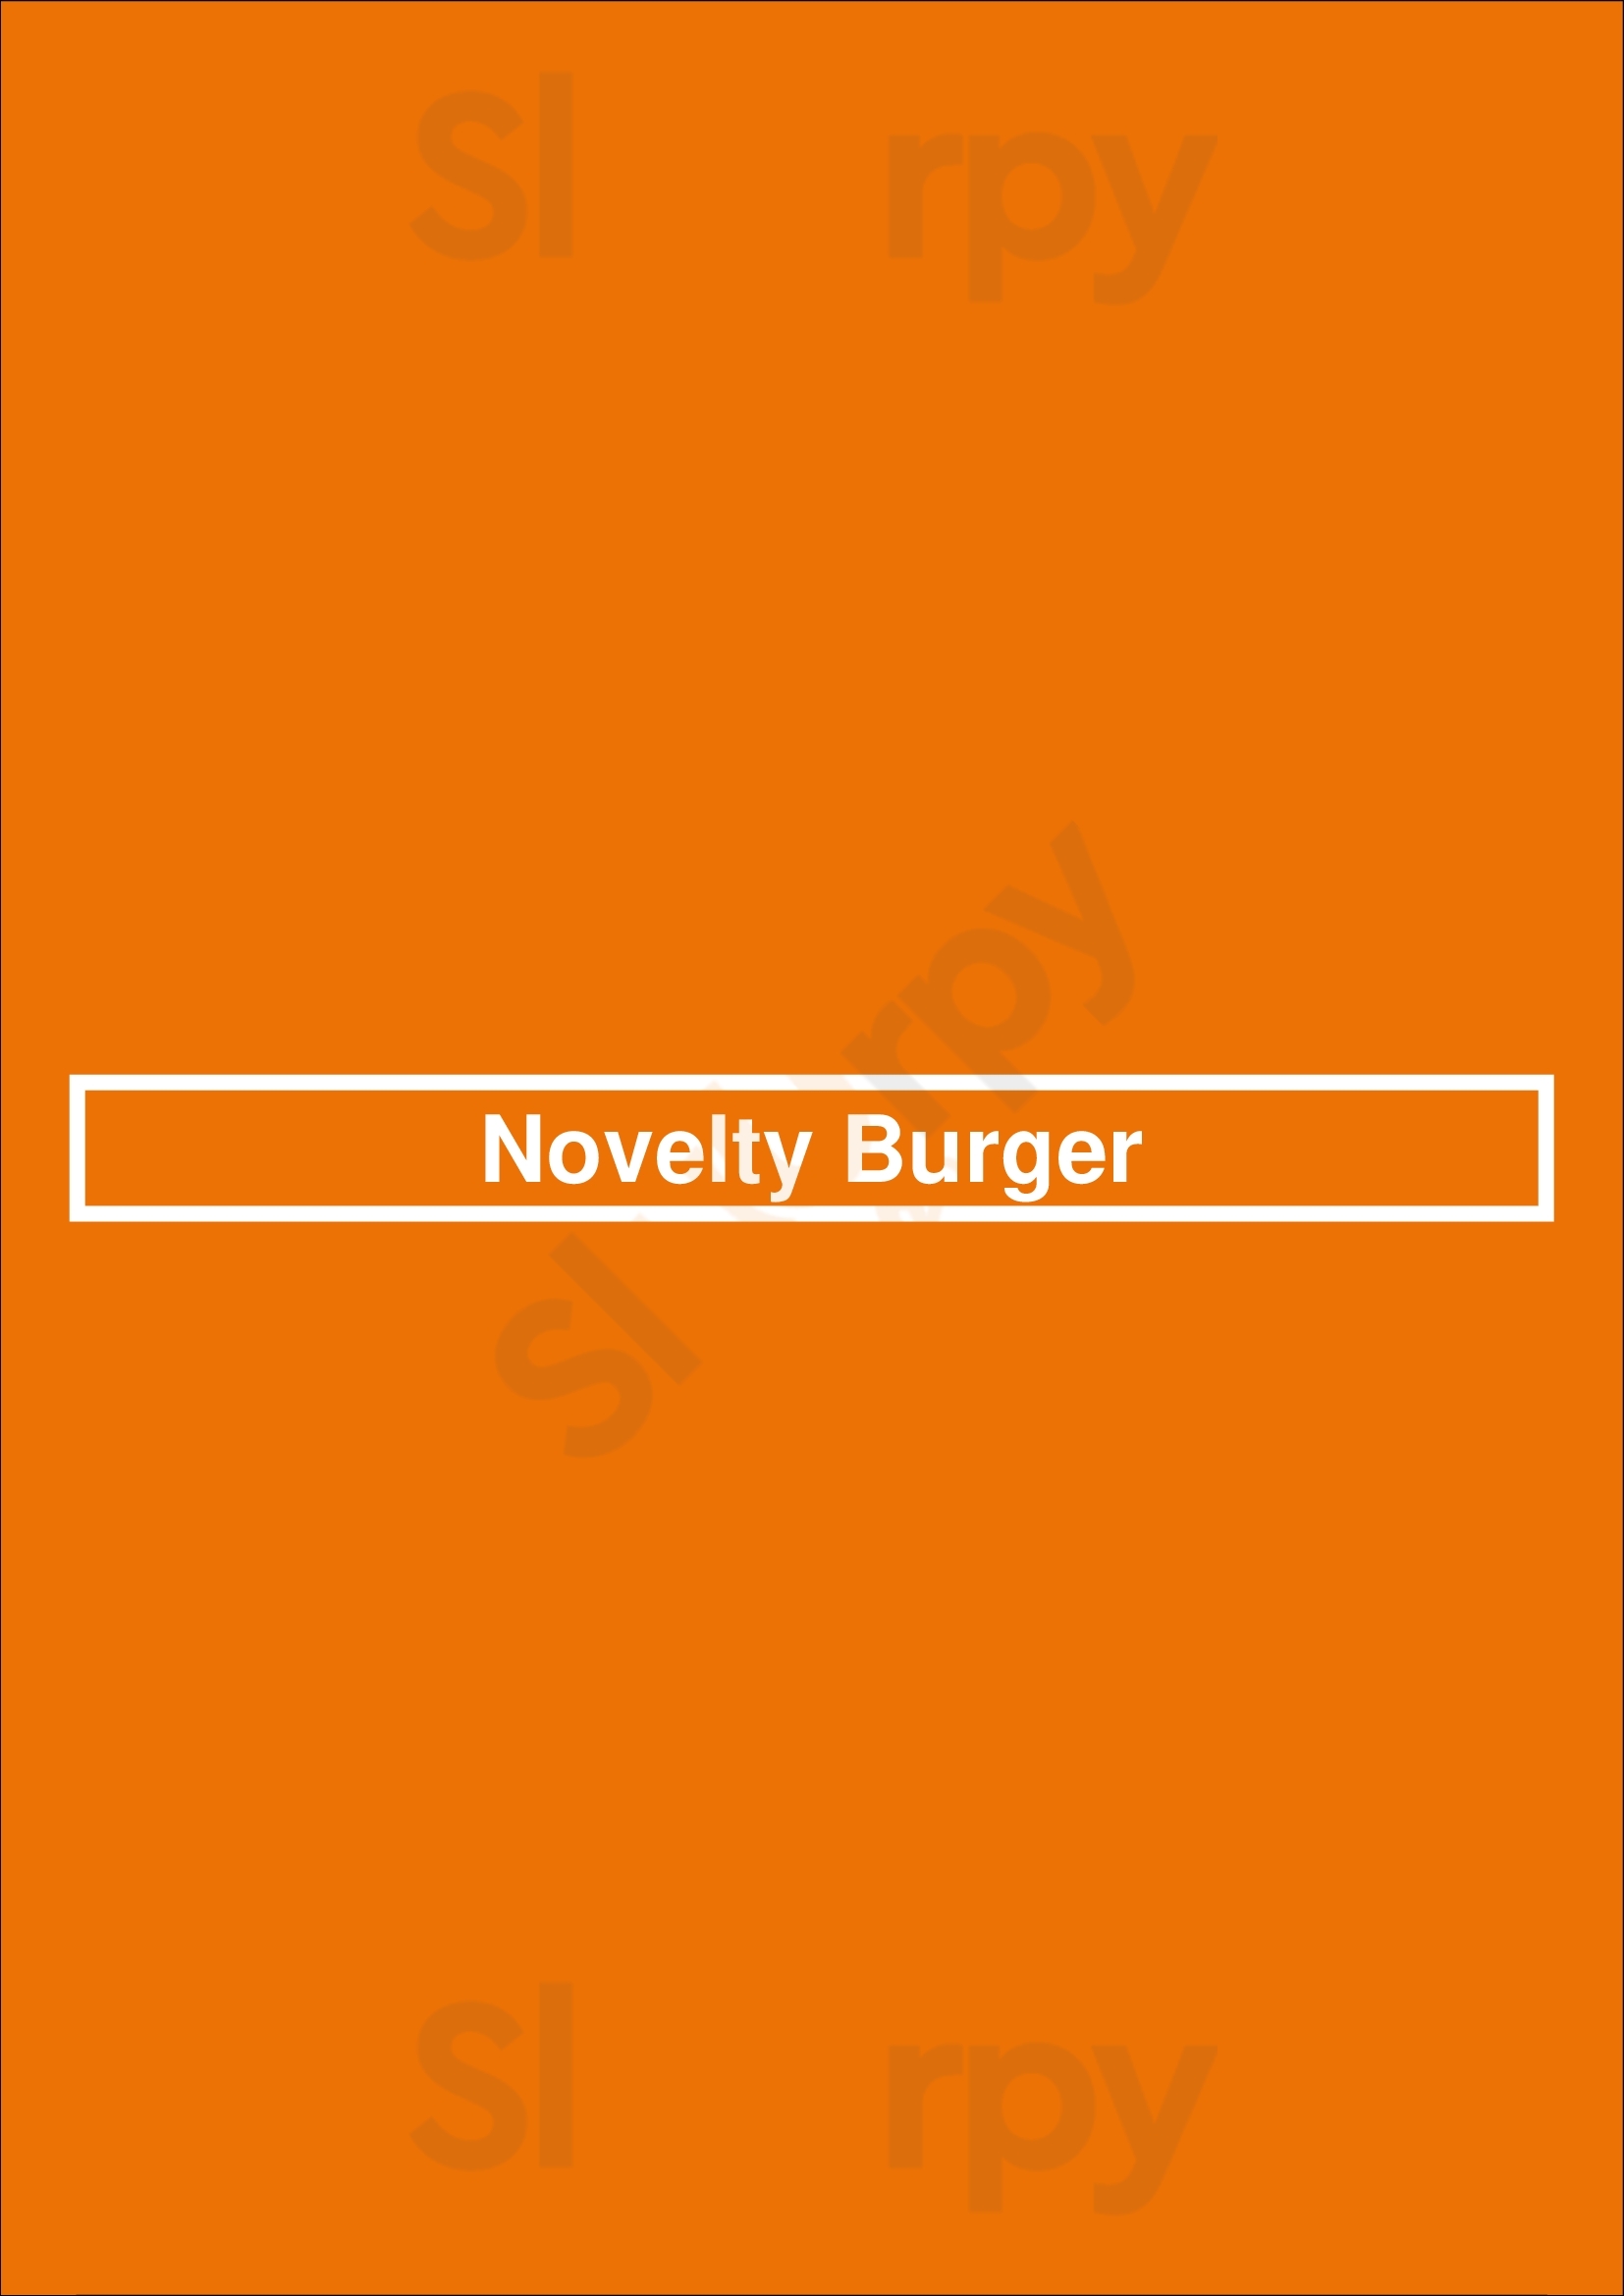 Novelty Burger Newark Menu - 1